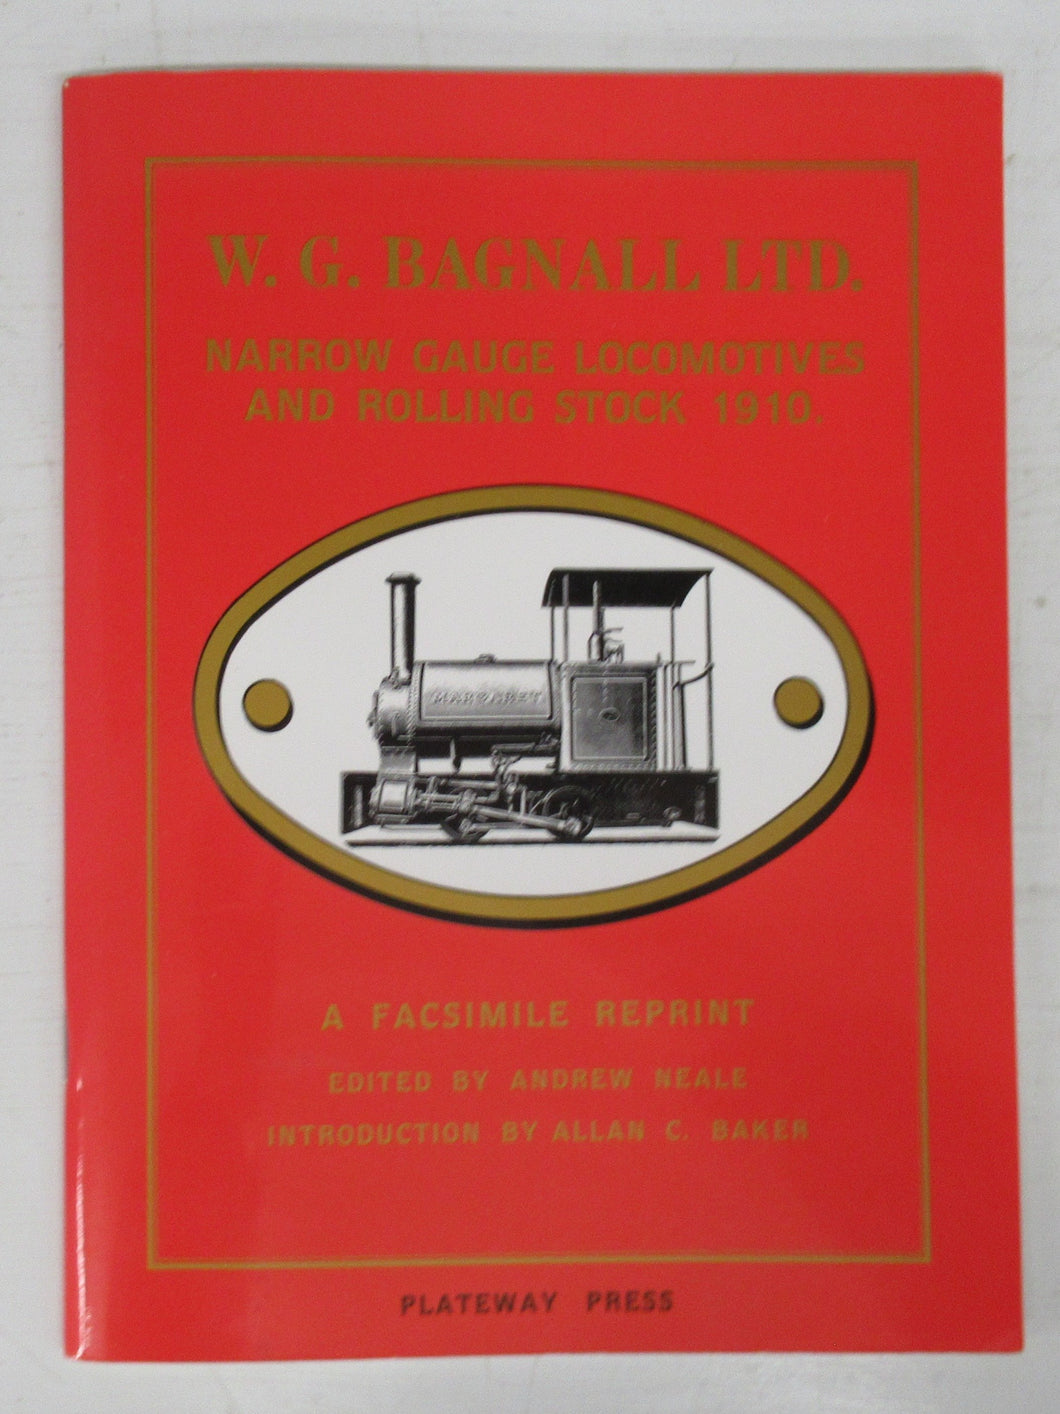 W. G. Bagnall Ltd. Narrow Gauge Locomotives and Rolling Stock catalogue